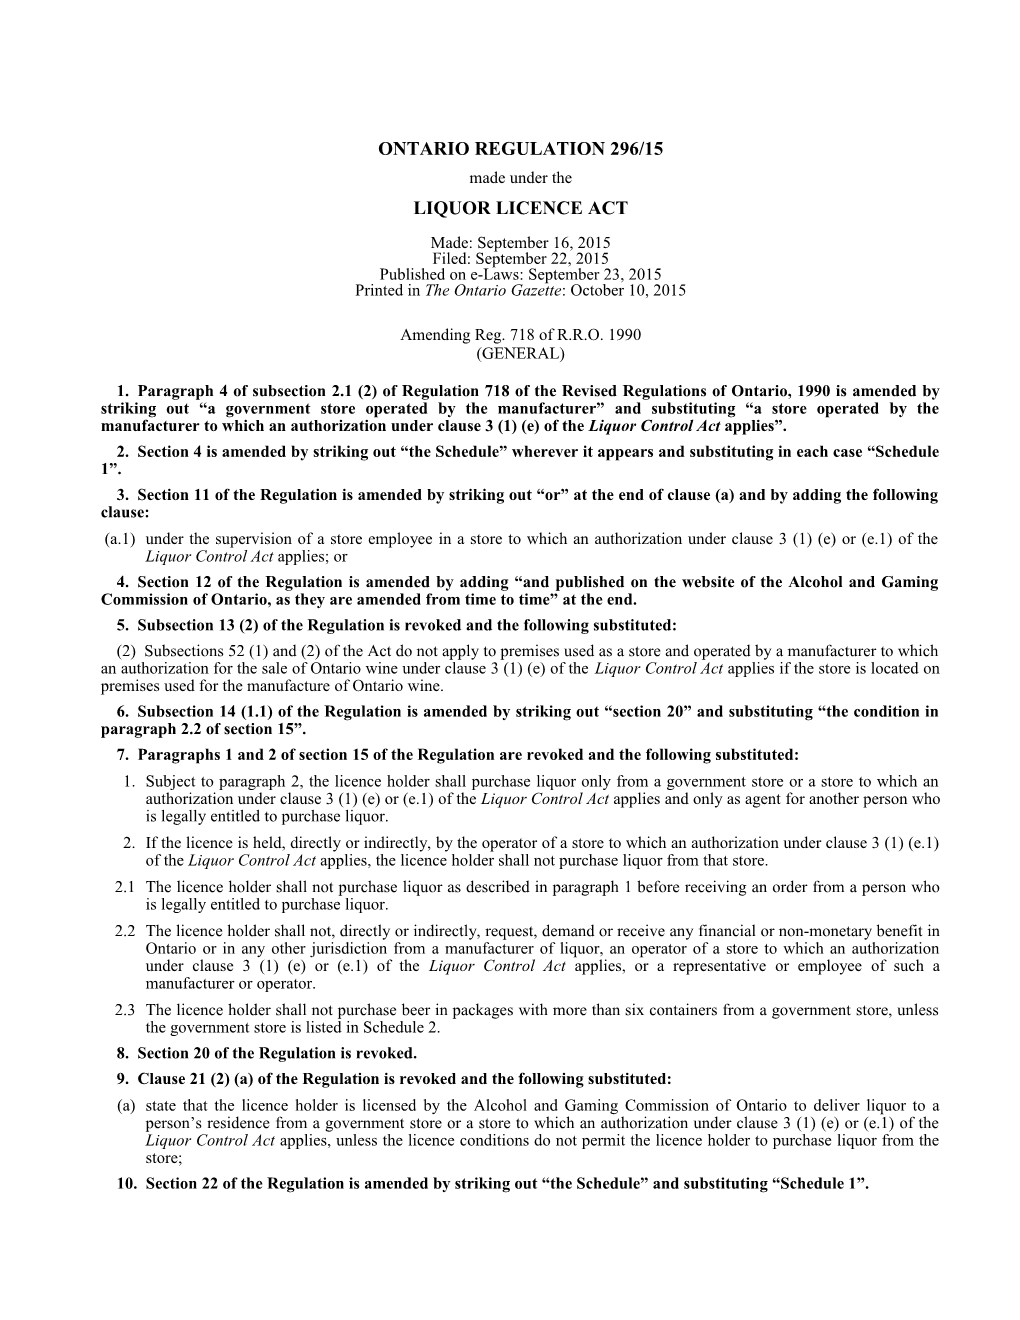 LIQUOR LICENCE ACT - O. Reg. 296/15